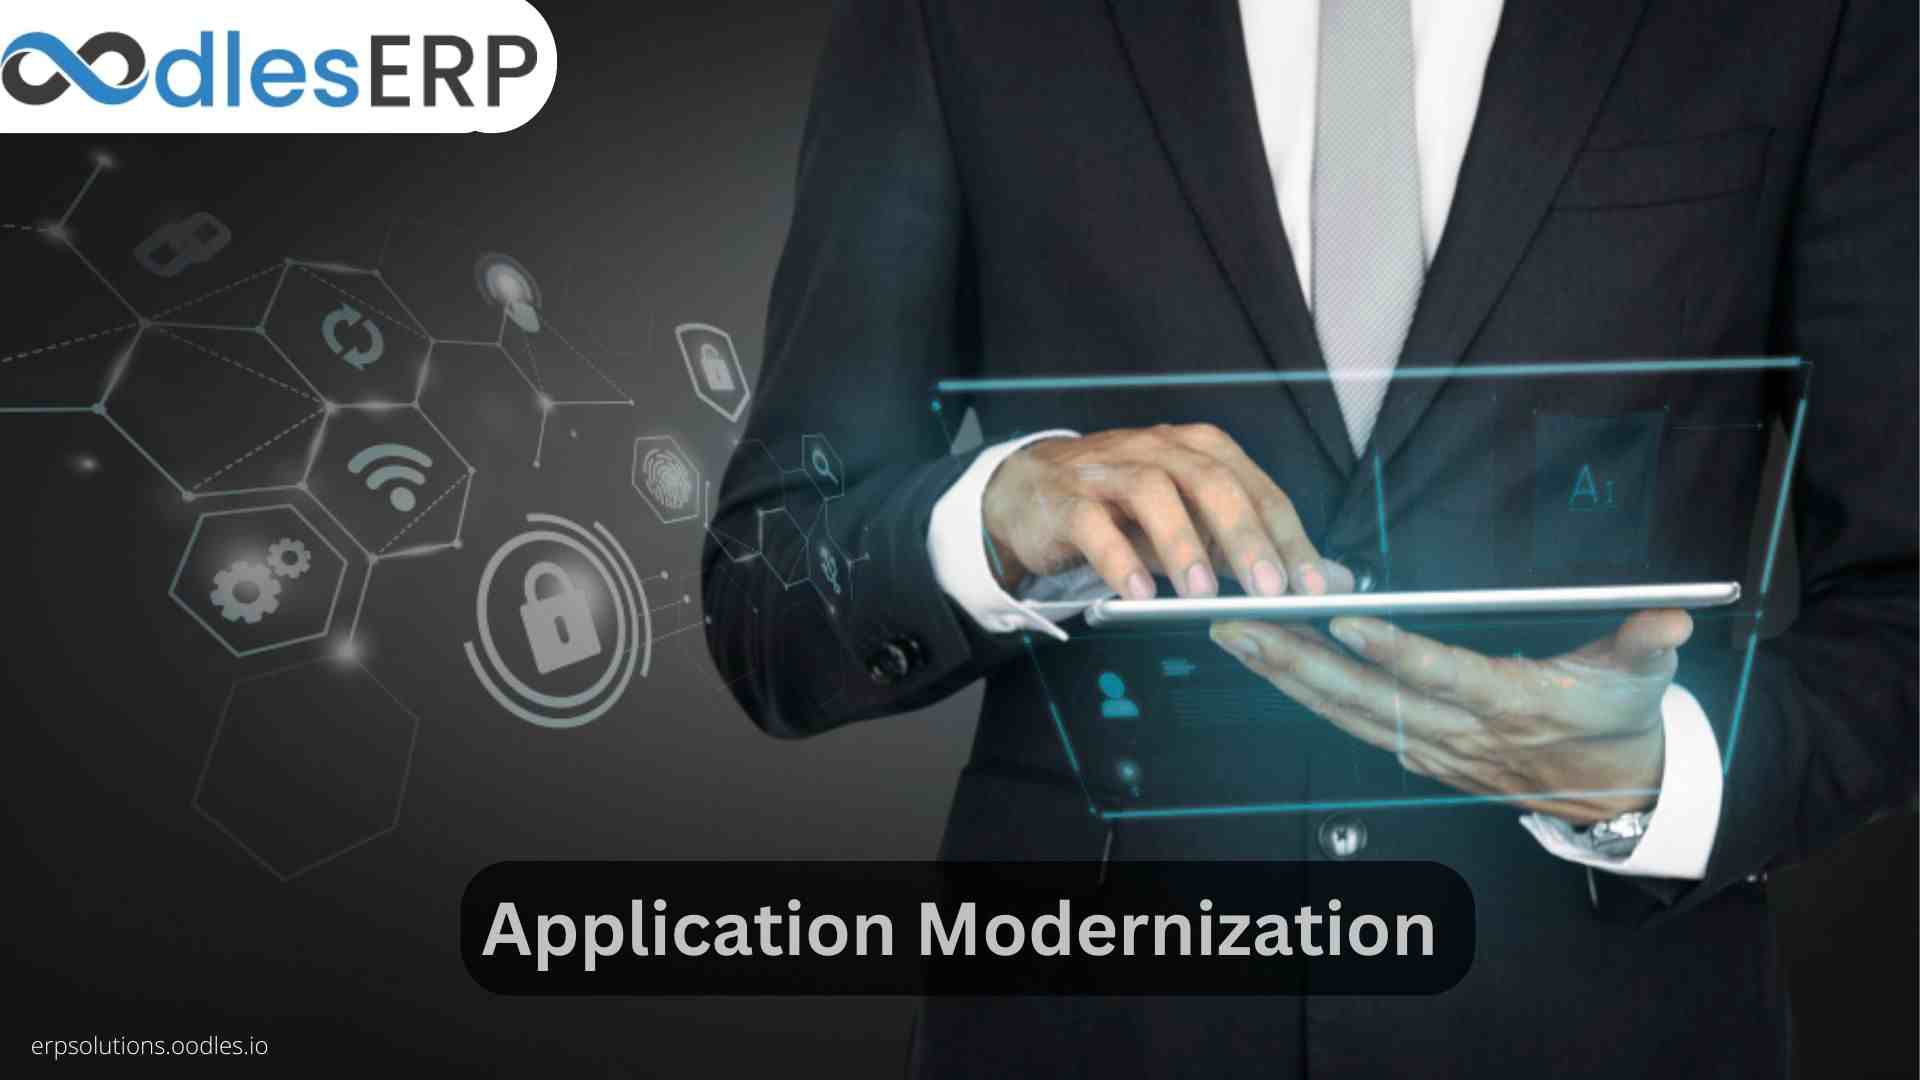 Enterprise Application Modernization To Reduce Operational Costs